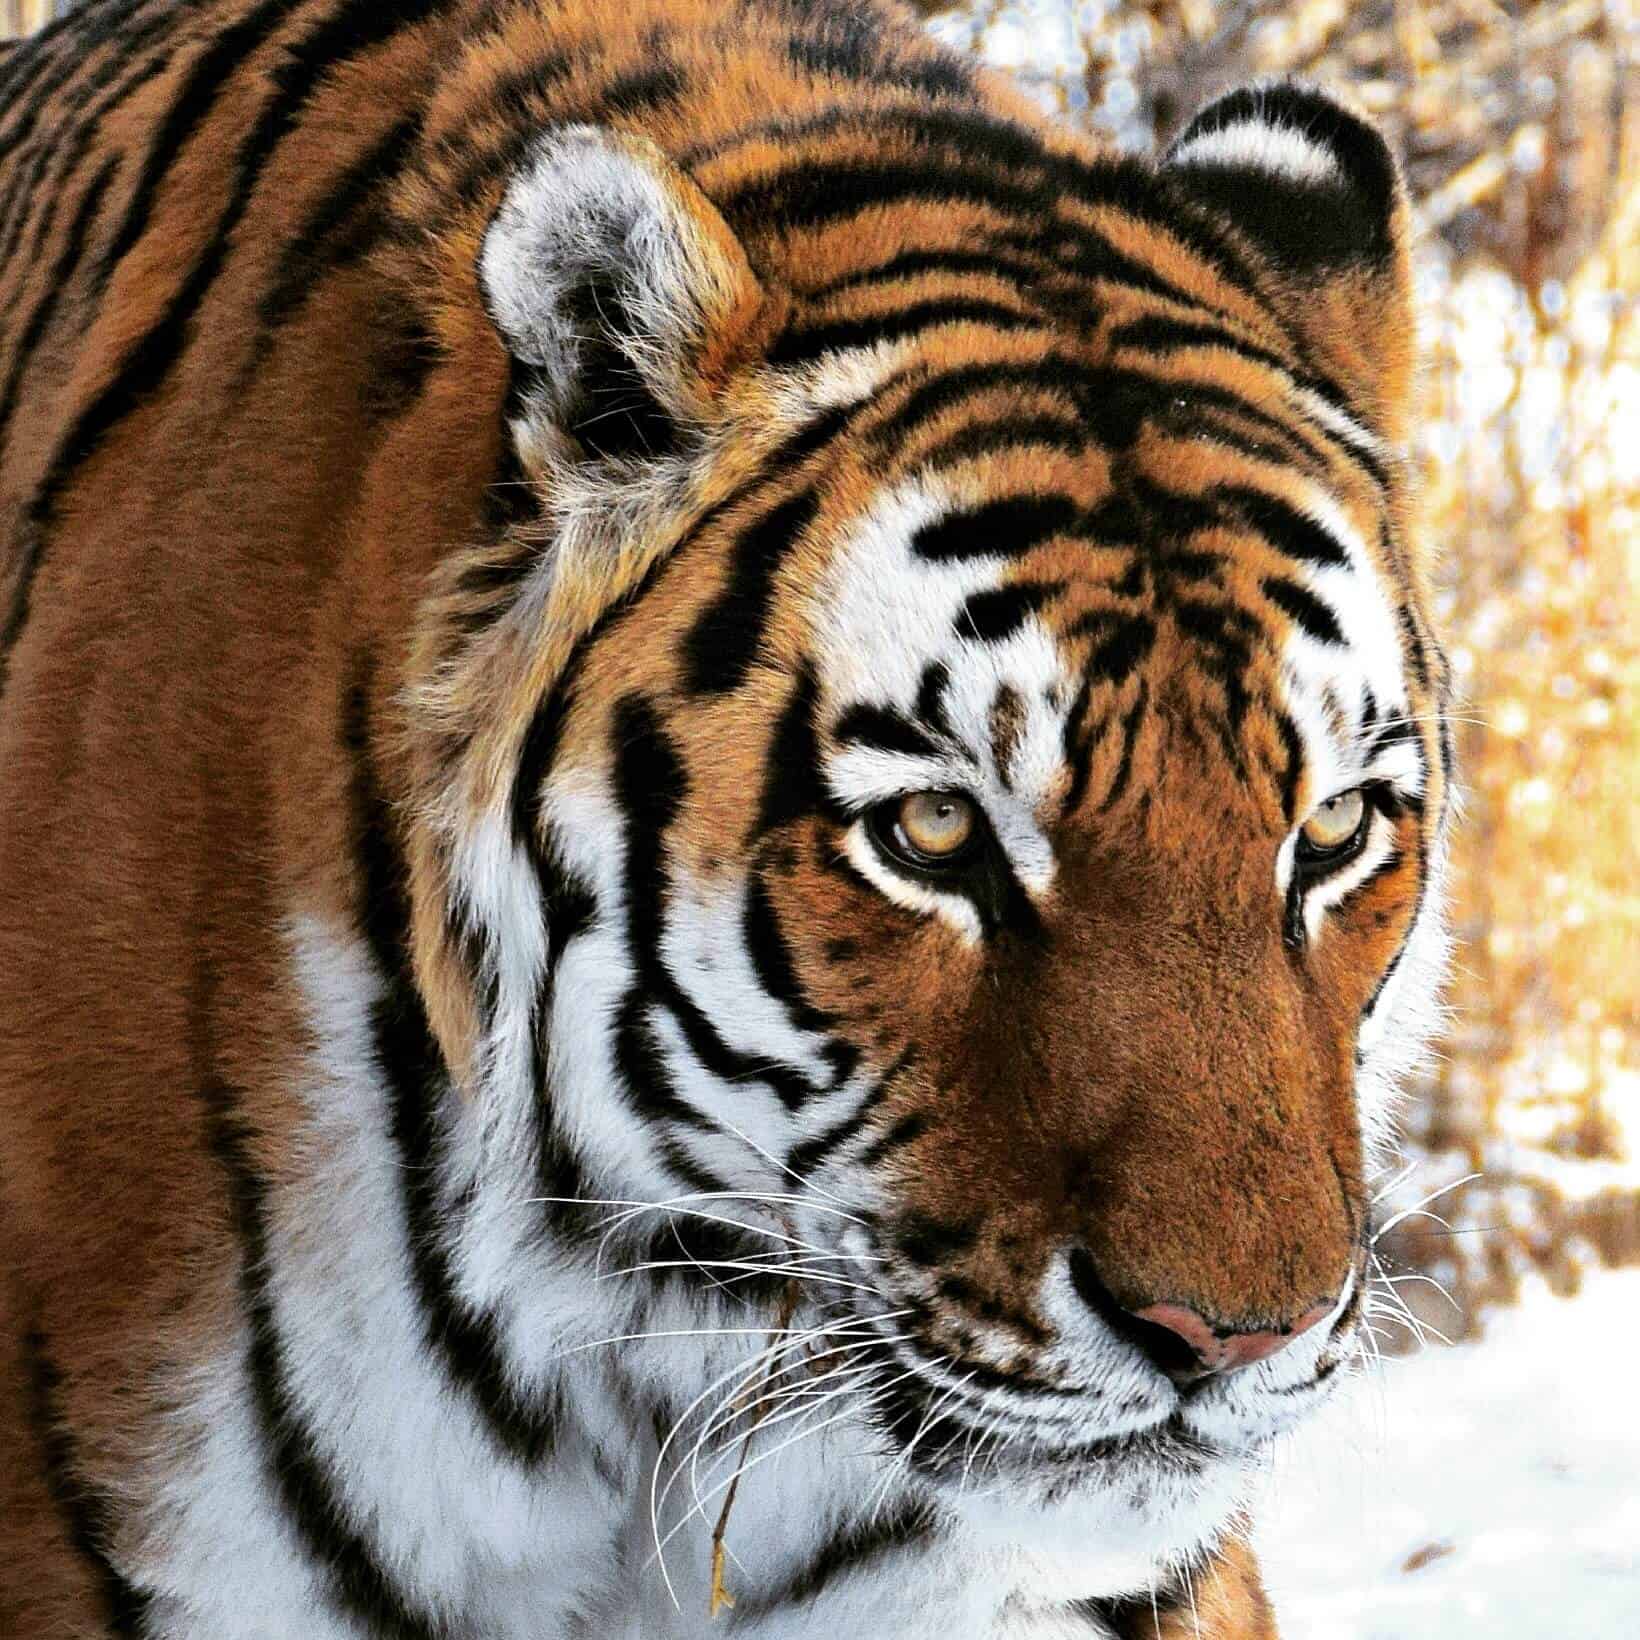 Tiger, Calgary Zoo